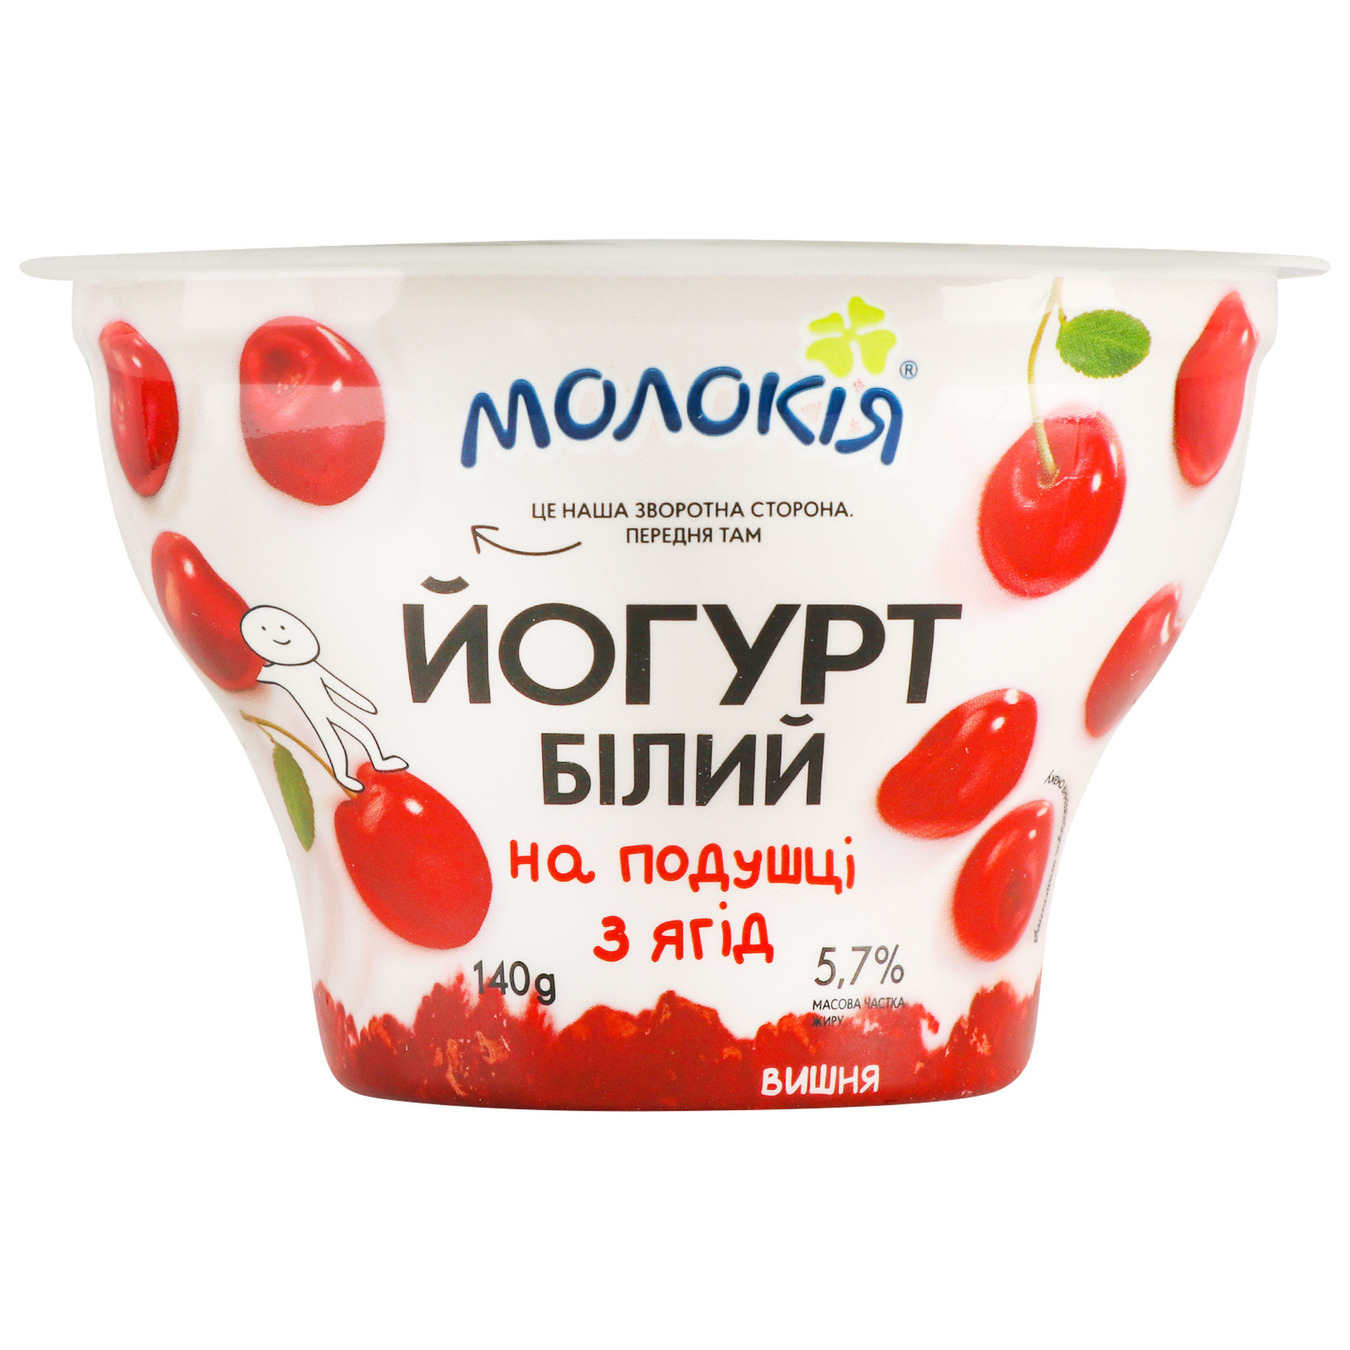 Molokiya white yogurt on a pillow of Cherry berries 5.7% cup 140g